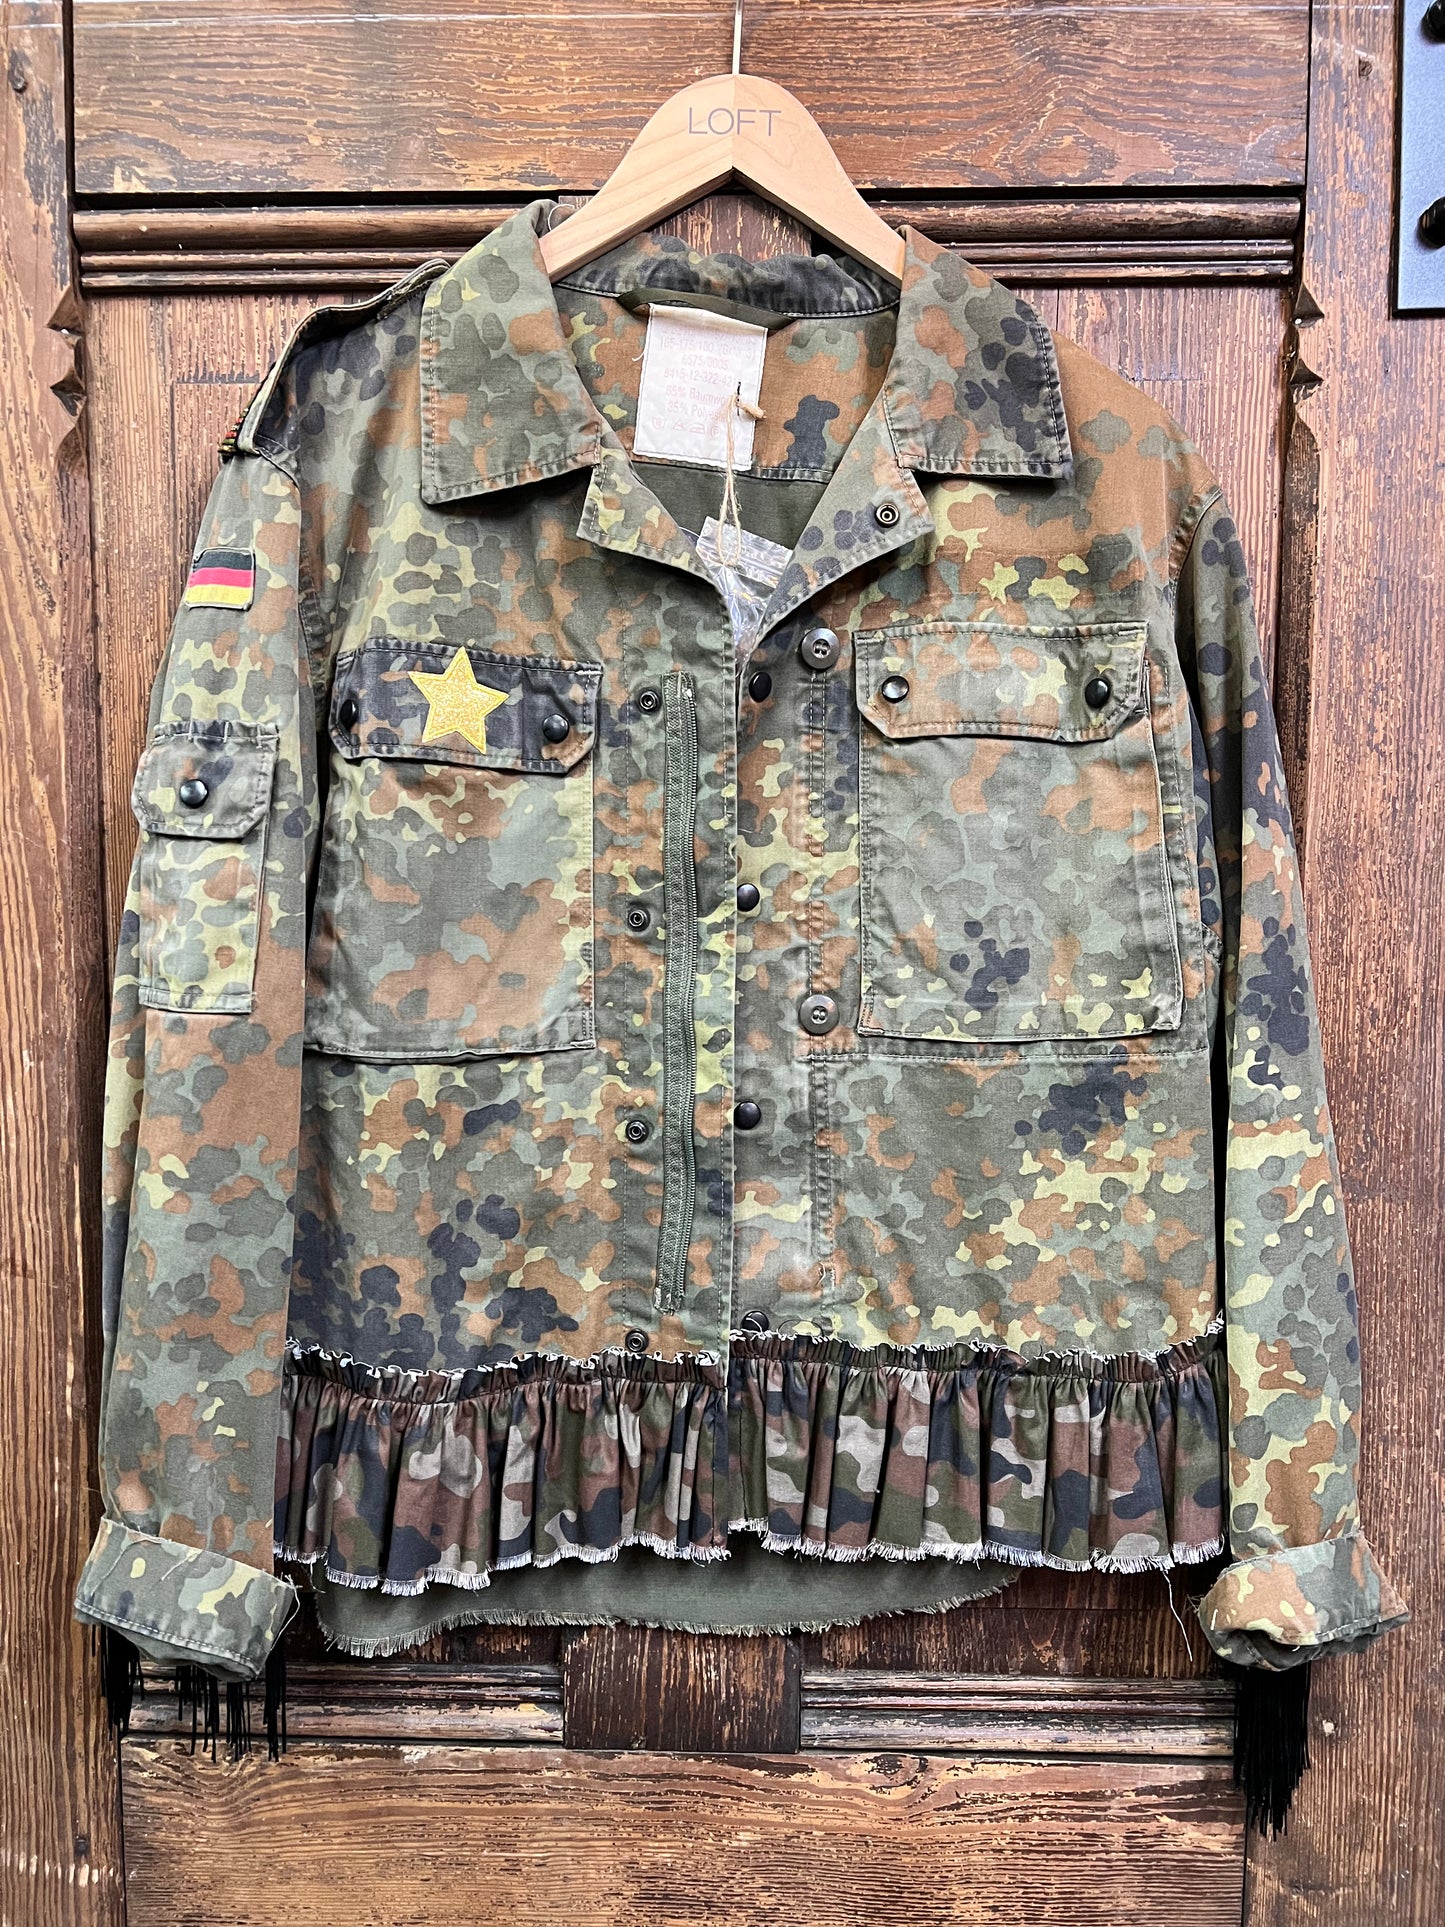 Customized Army Jacket - Varsity Letter Patchwork